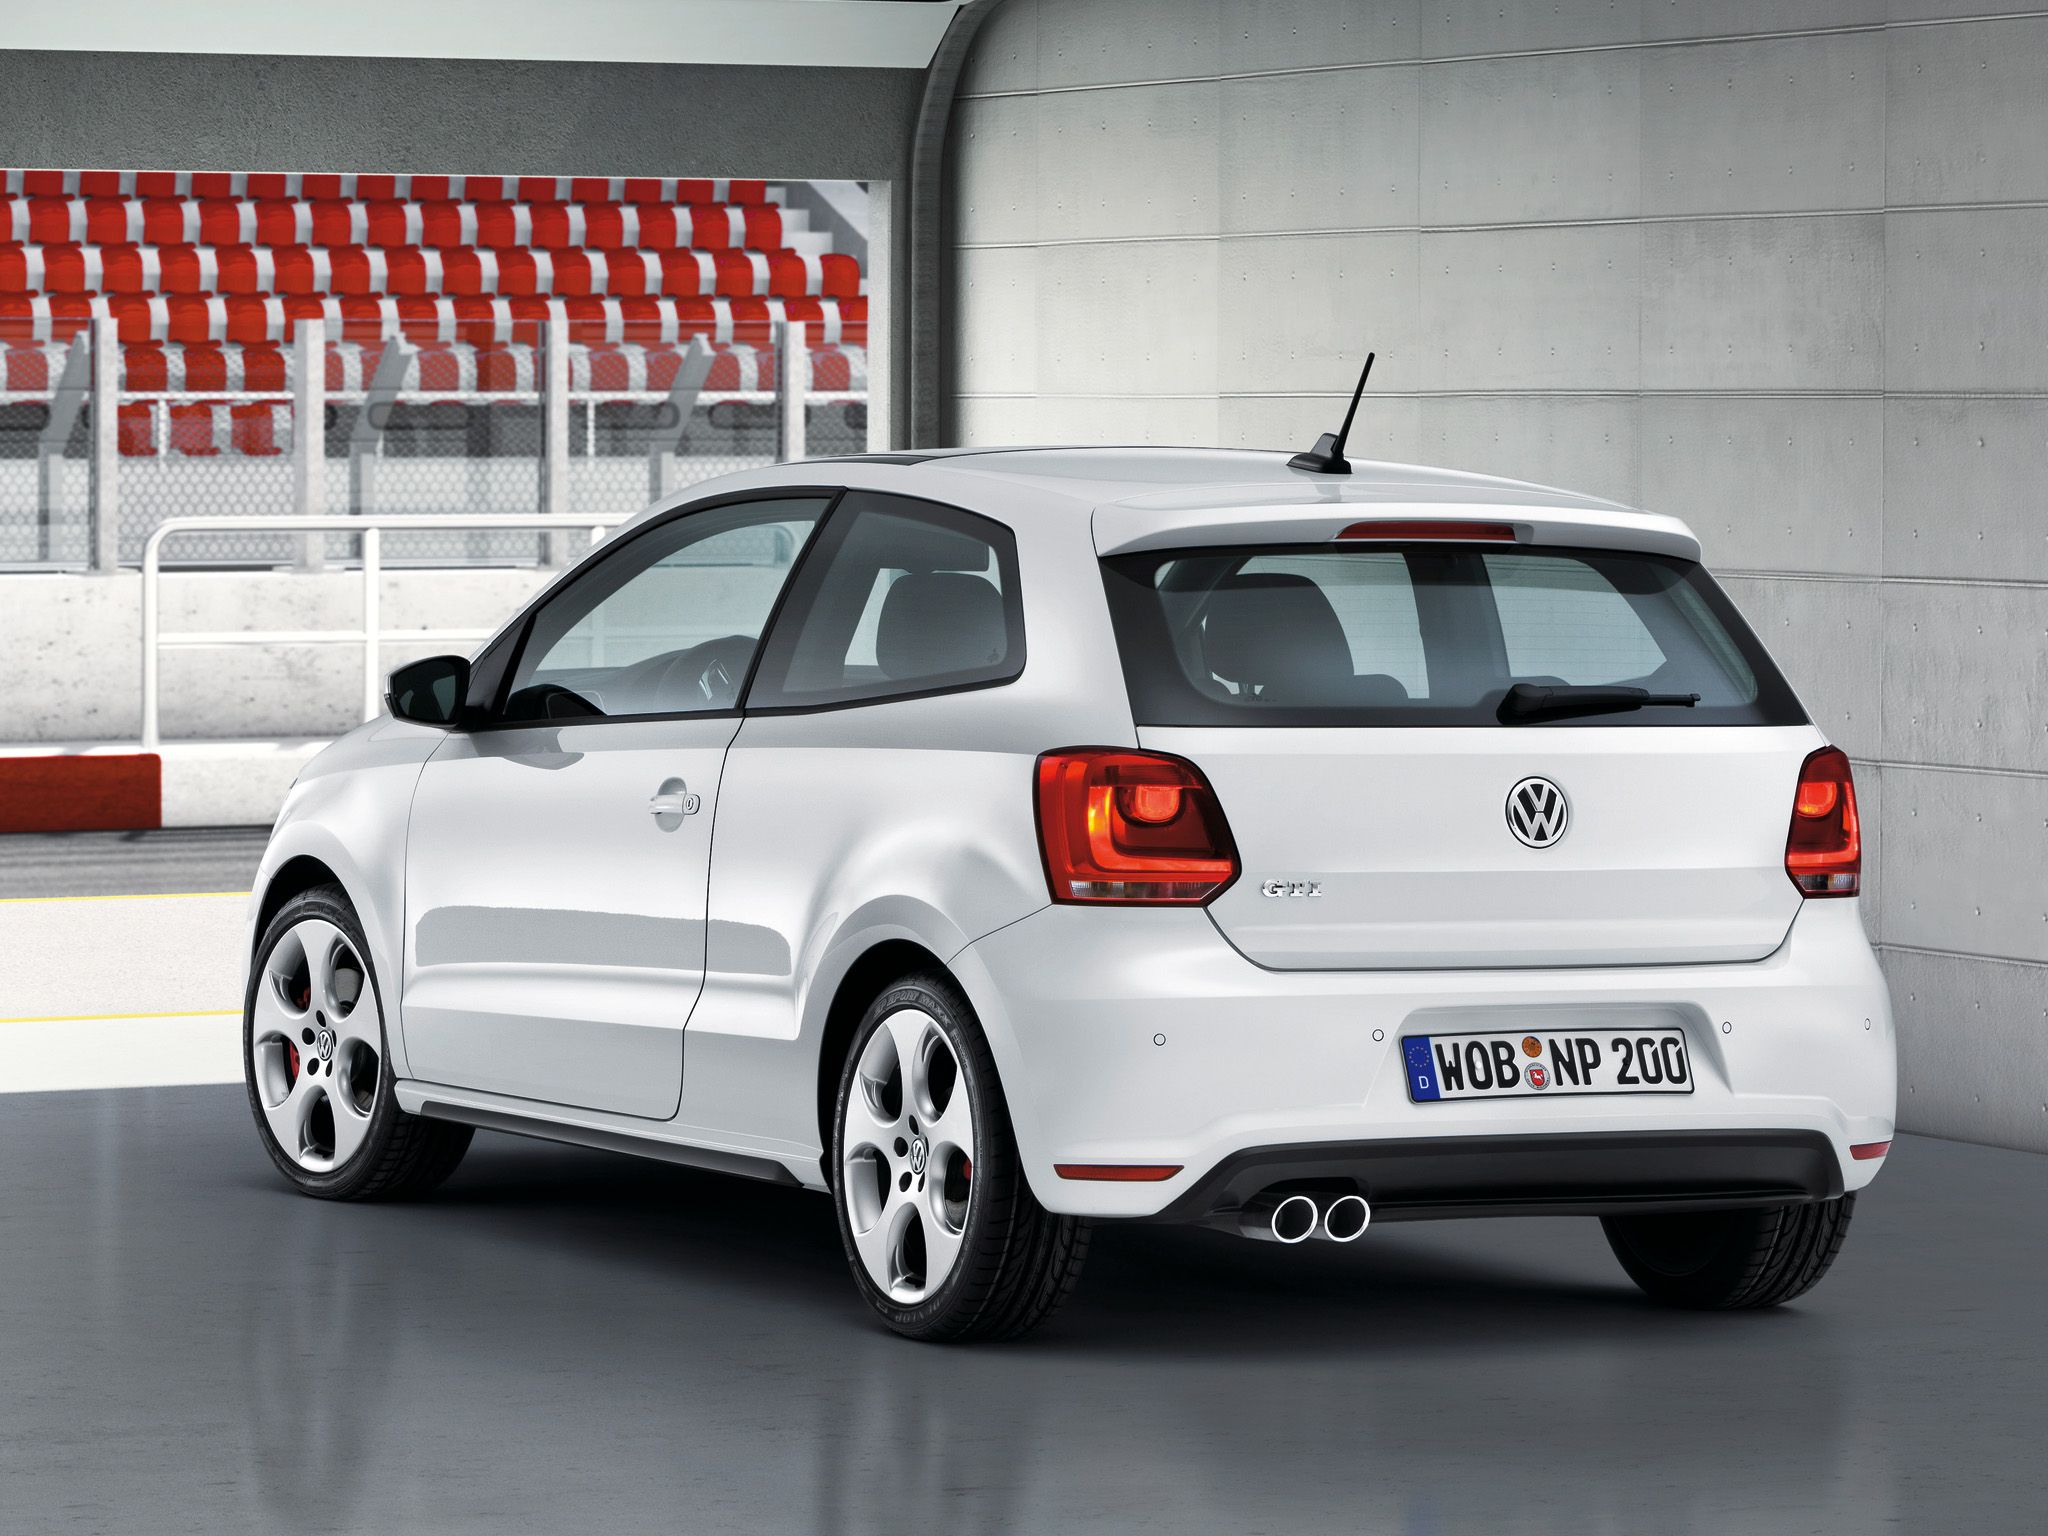 2010-Volkswagen-Polo-GTI-003-1536